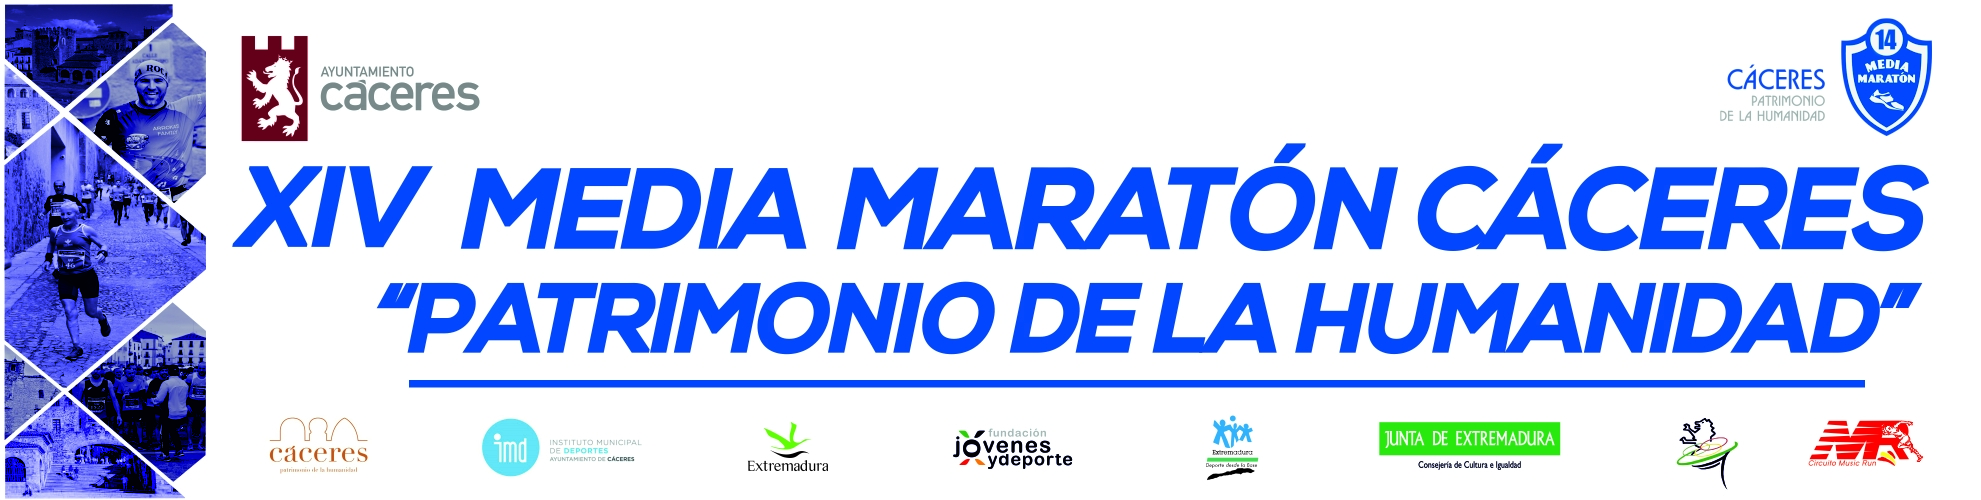 XIV Media Maratón Cáceres "Patrimonio de la Humanidad"